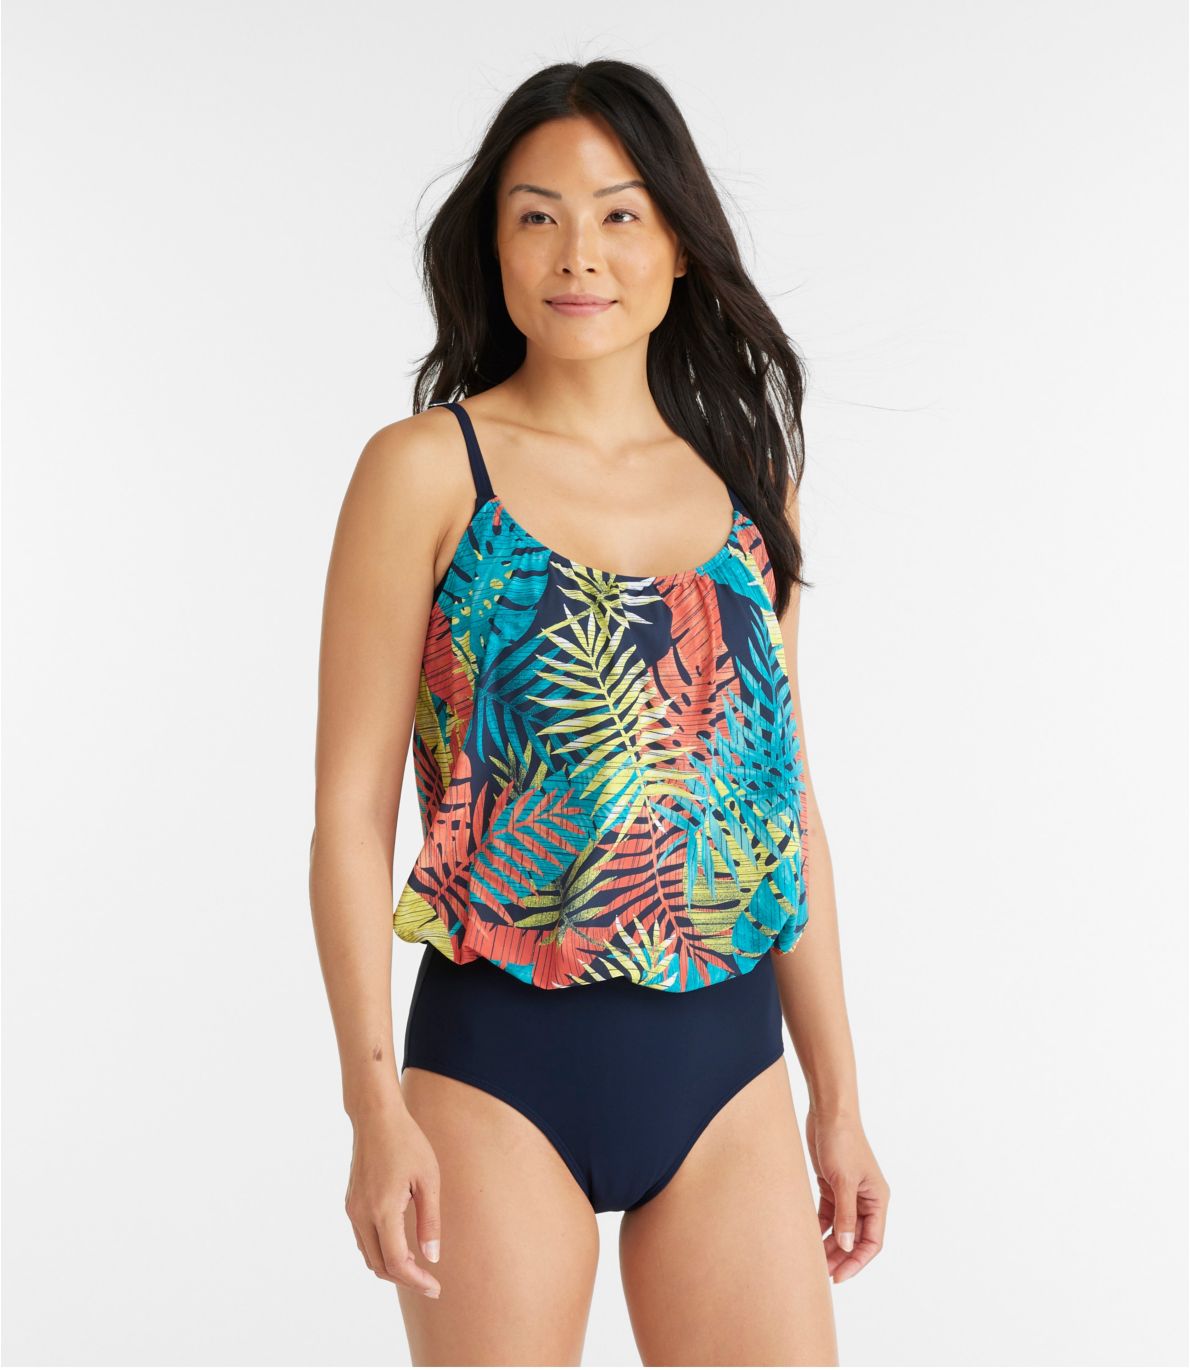 Women's Shaping Swimwear, Blouson Tanksuit Print